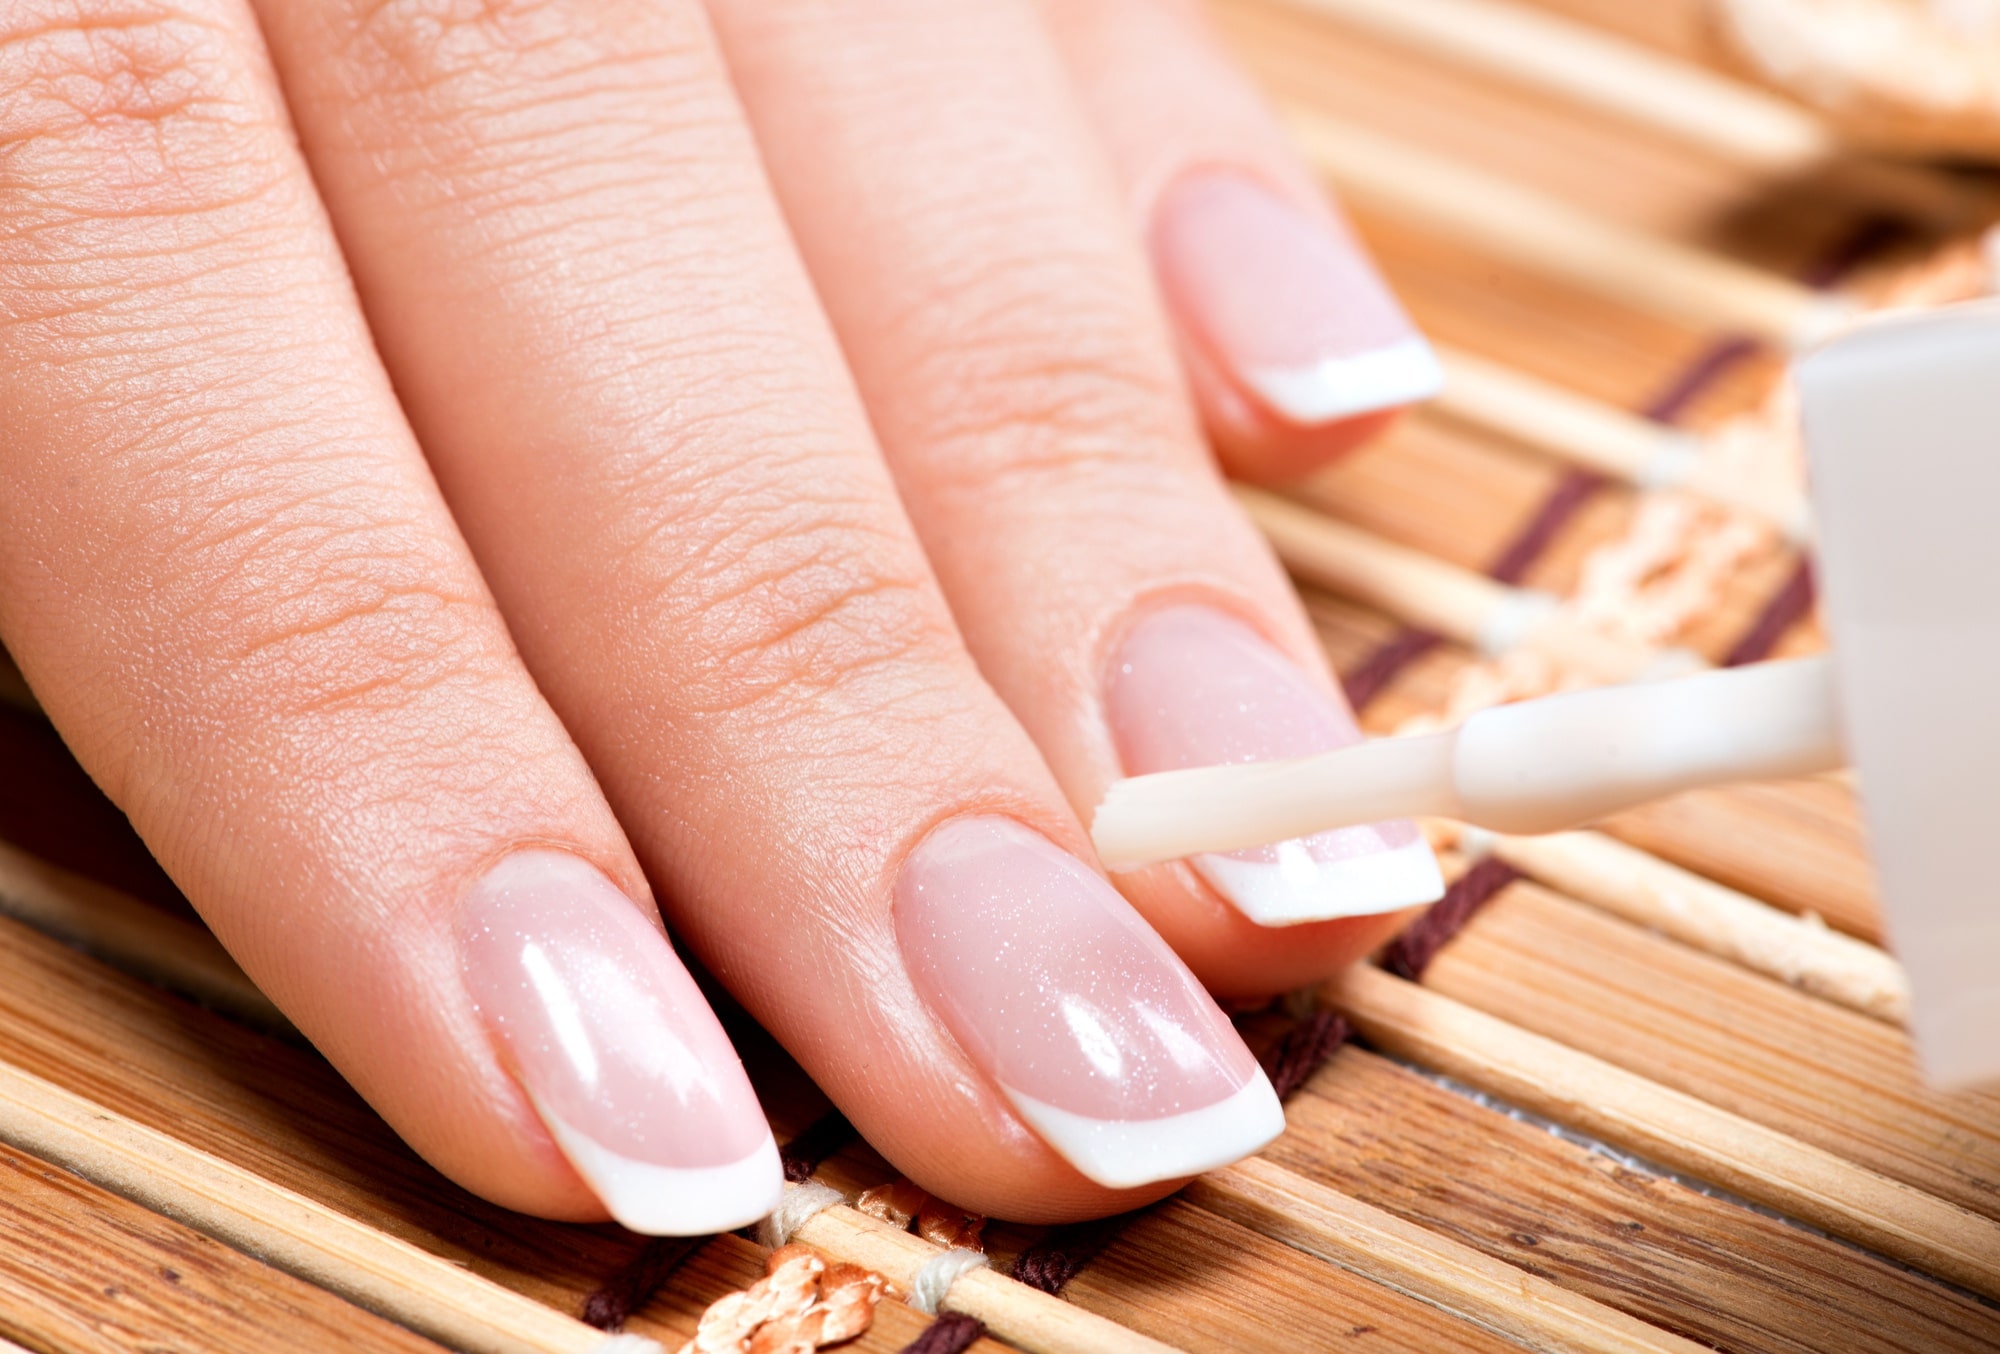 woman-nail-salon-receiving-manicure-by-beautician-beauty-treatment